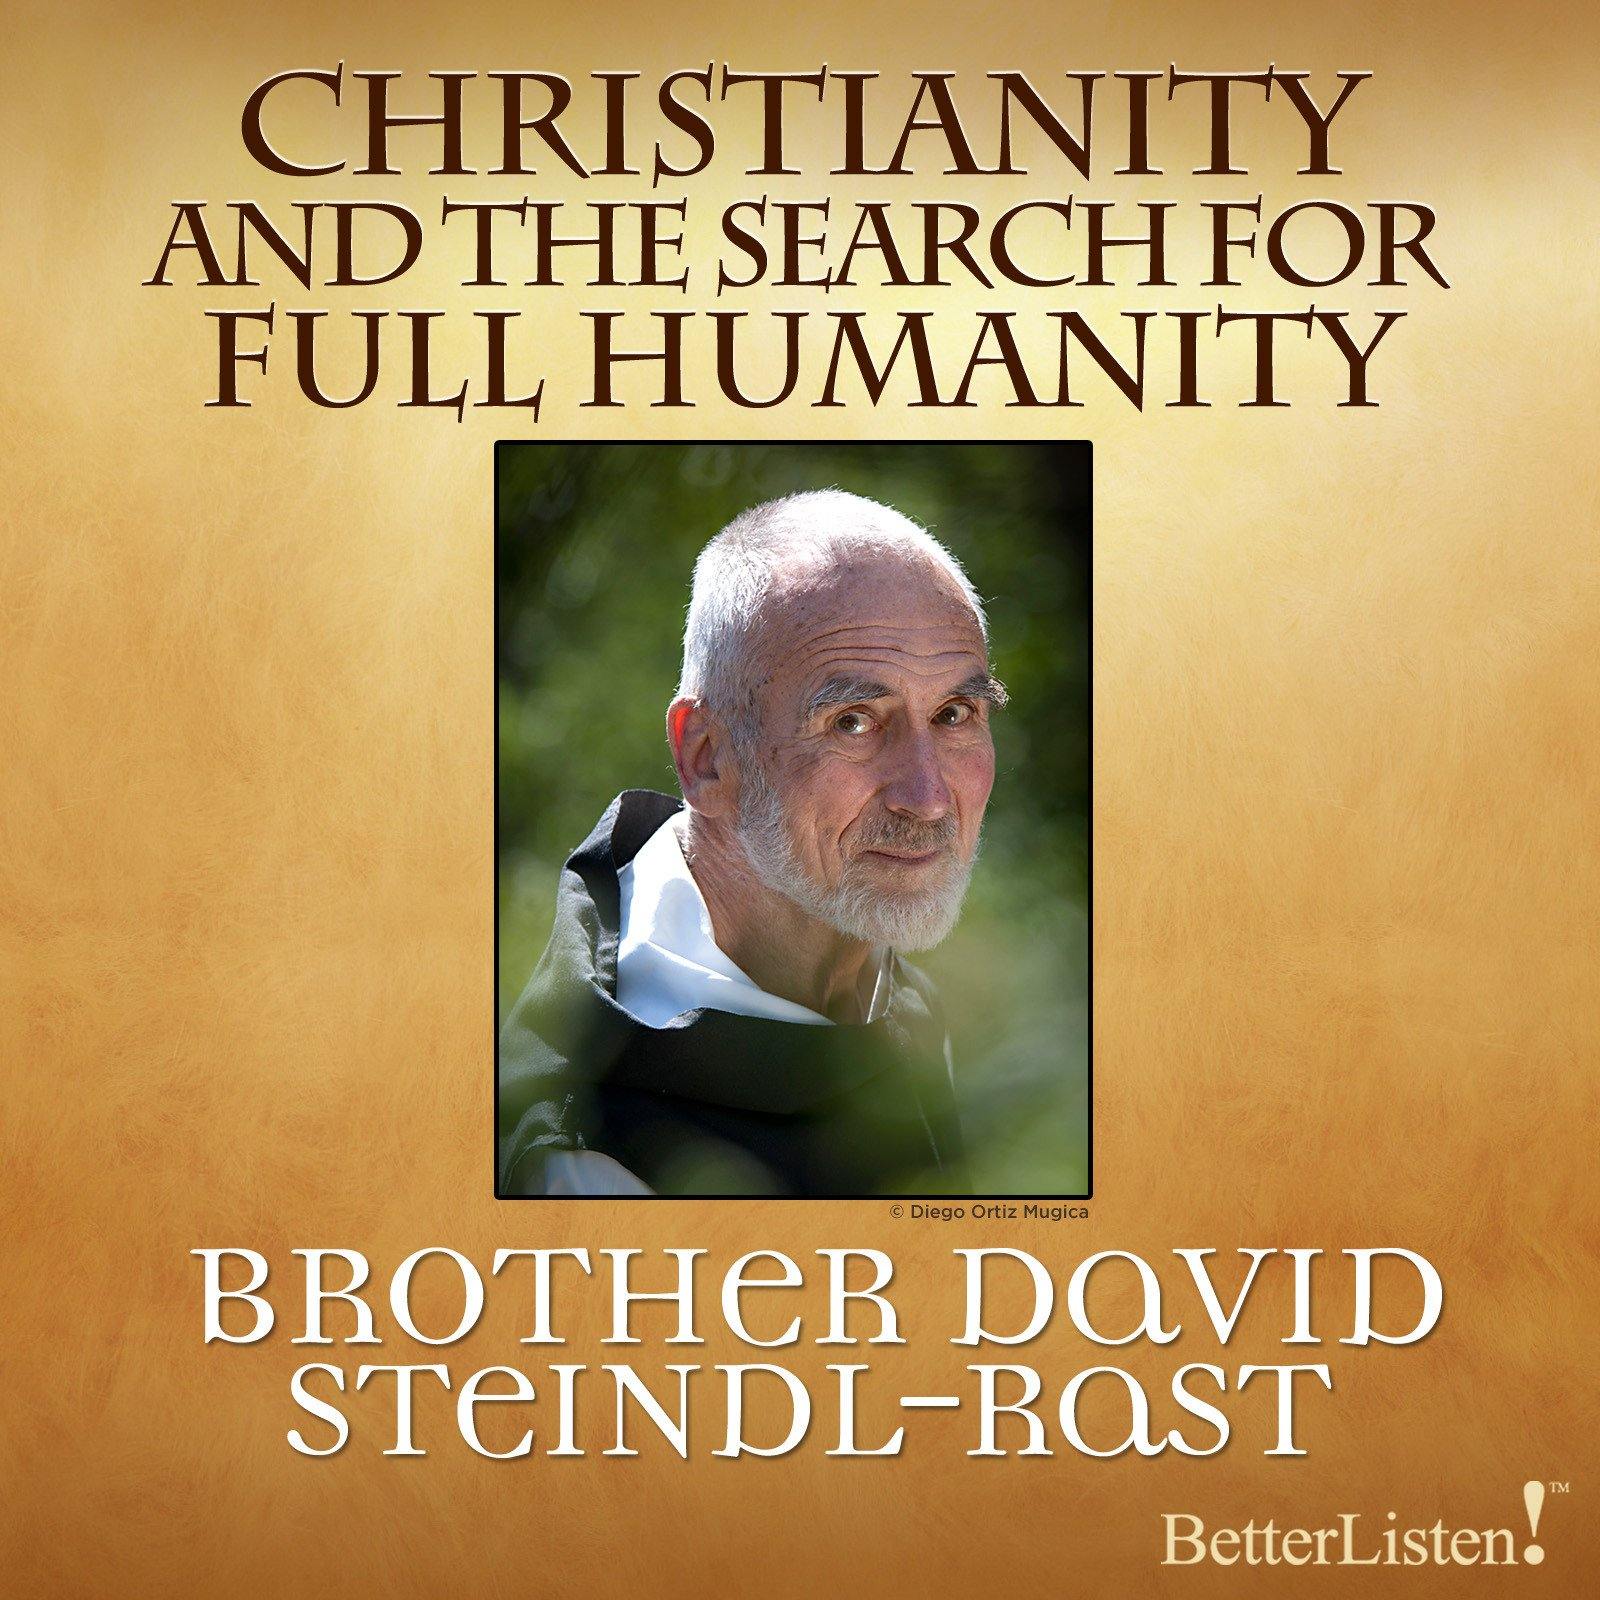 Christianity and Full Humanity with Brother David Steindl-Rast Audio Program BetterListen! - BetterListen!